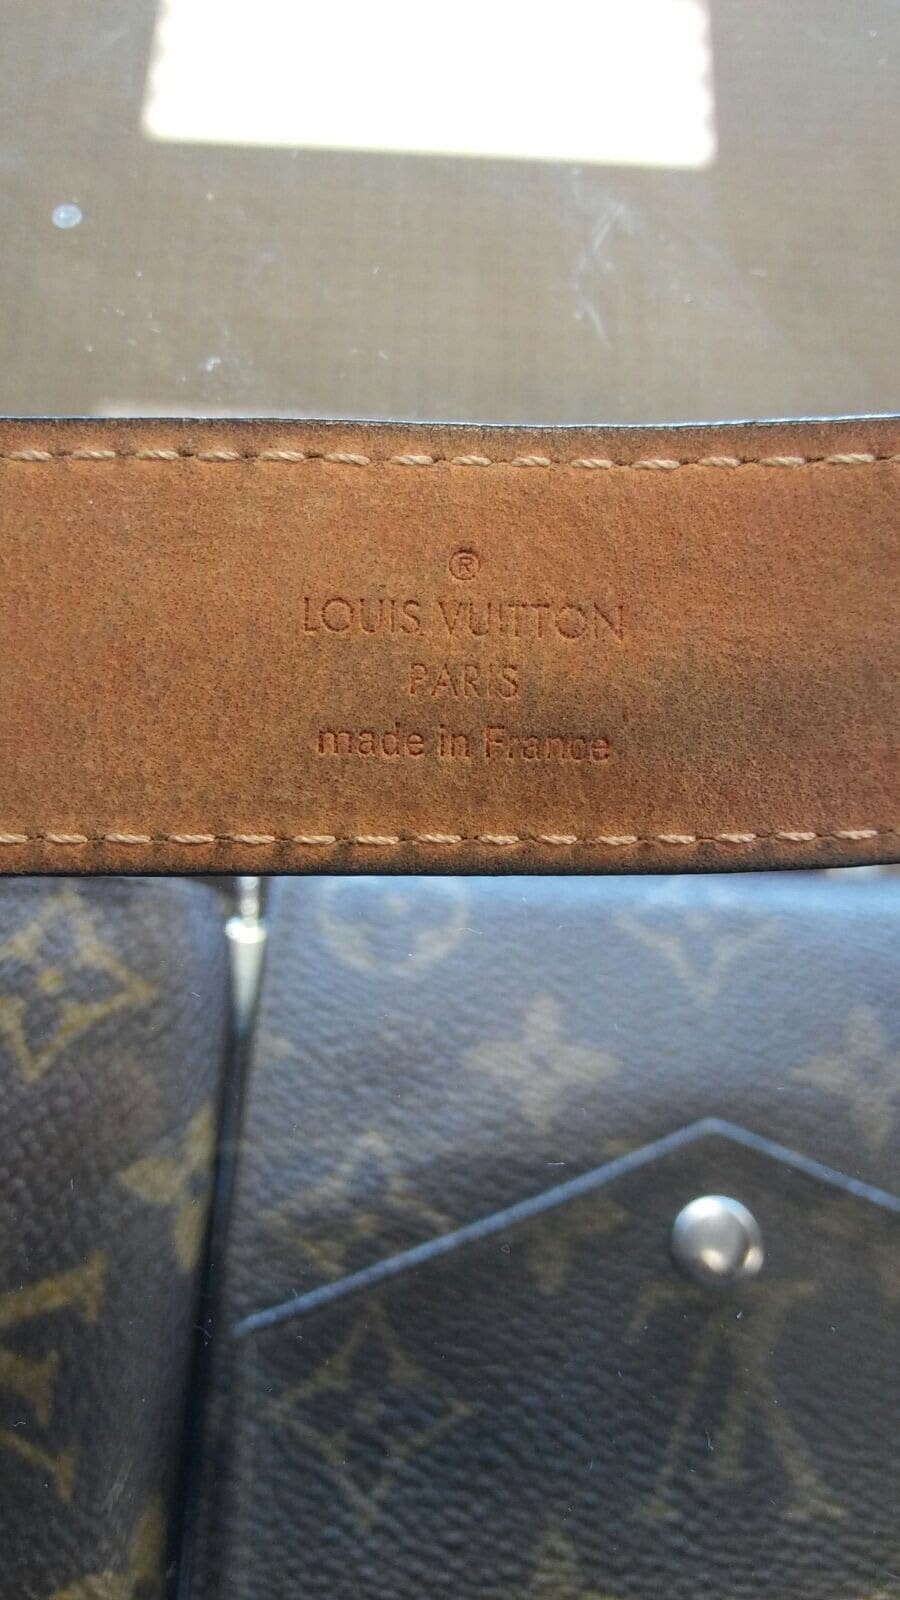 Louis Vuitton Brown Monogram Belt 90 36 Very Rare with Brass Buckle LV